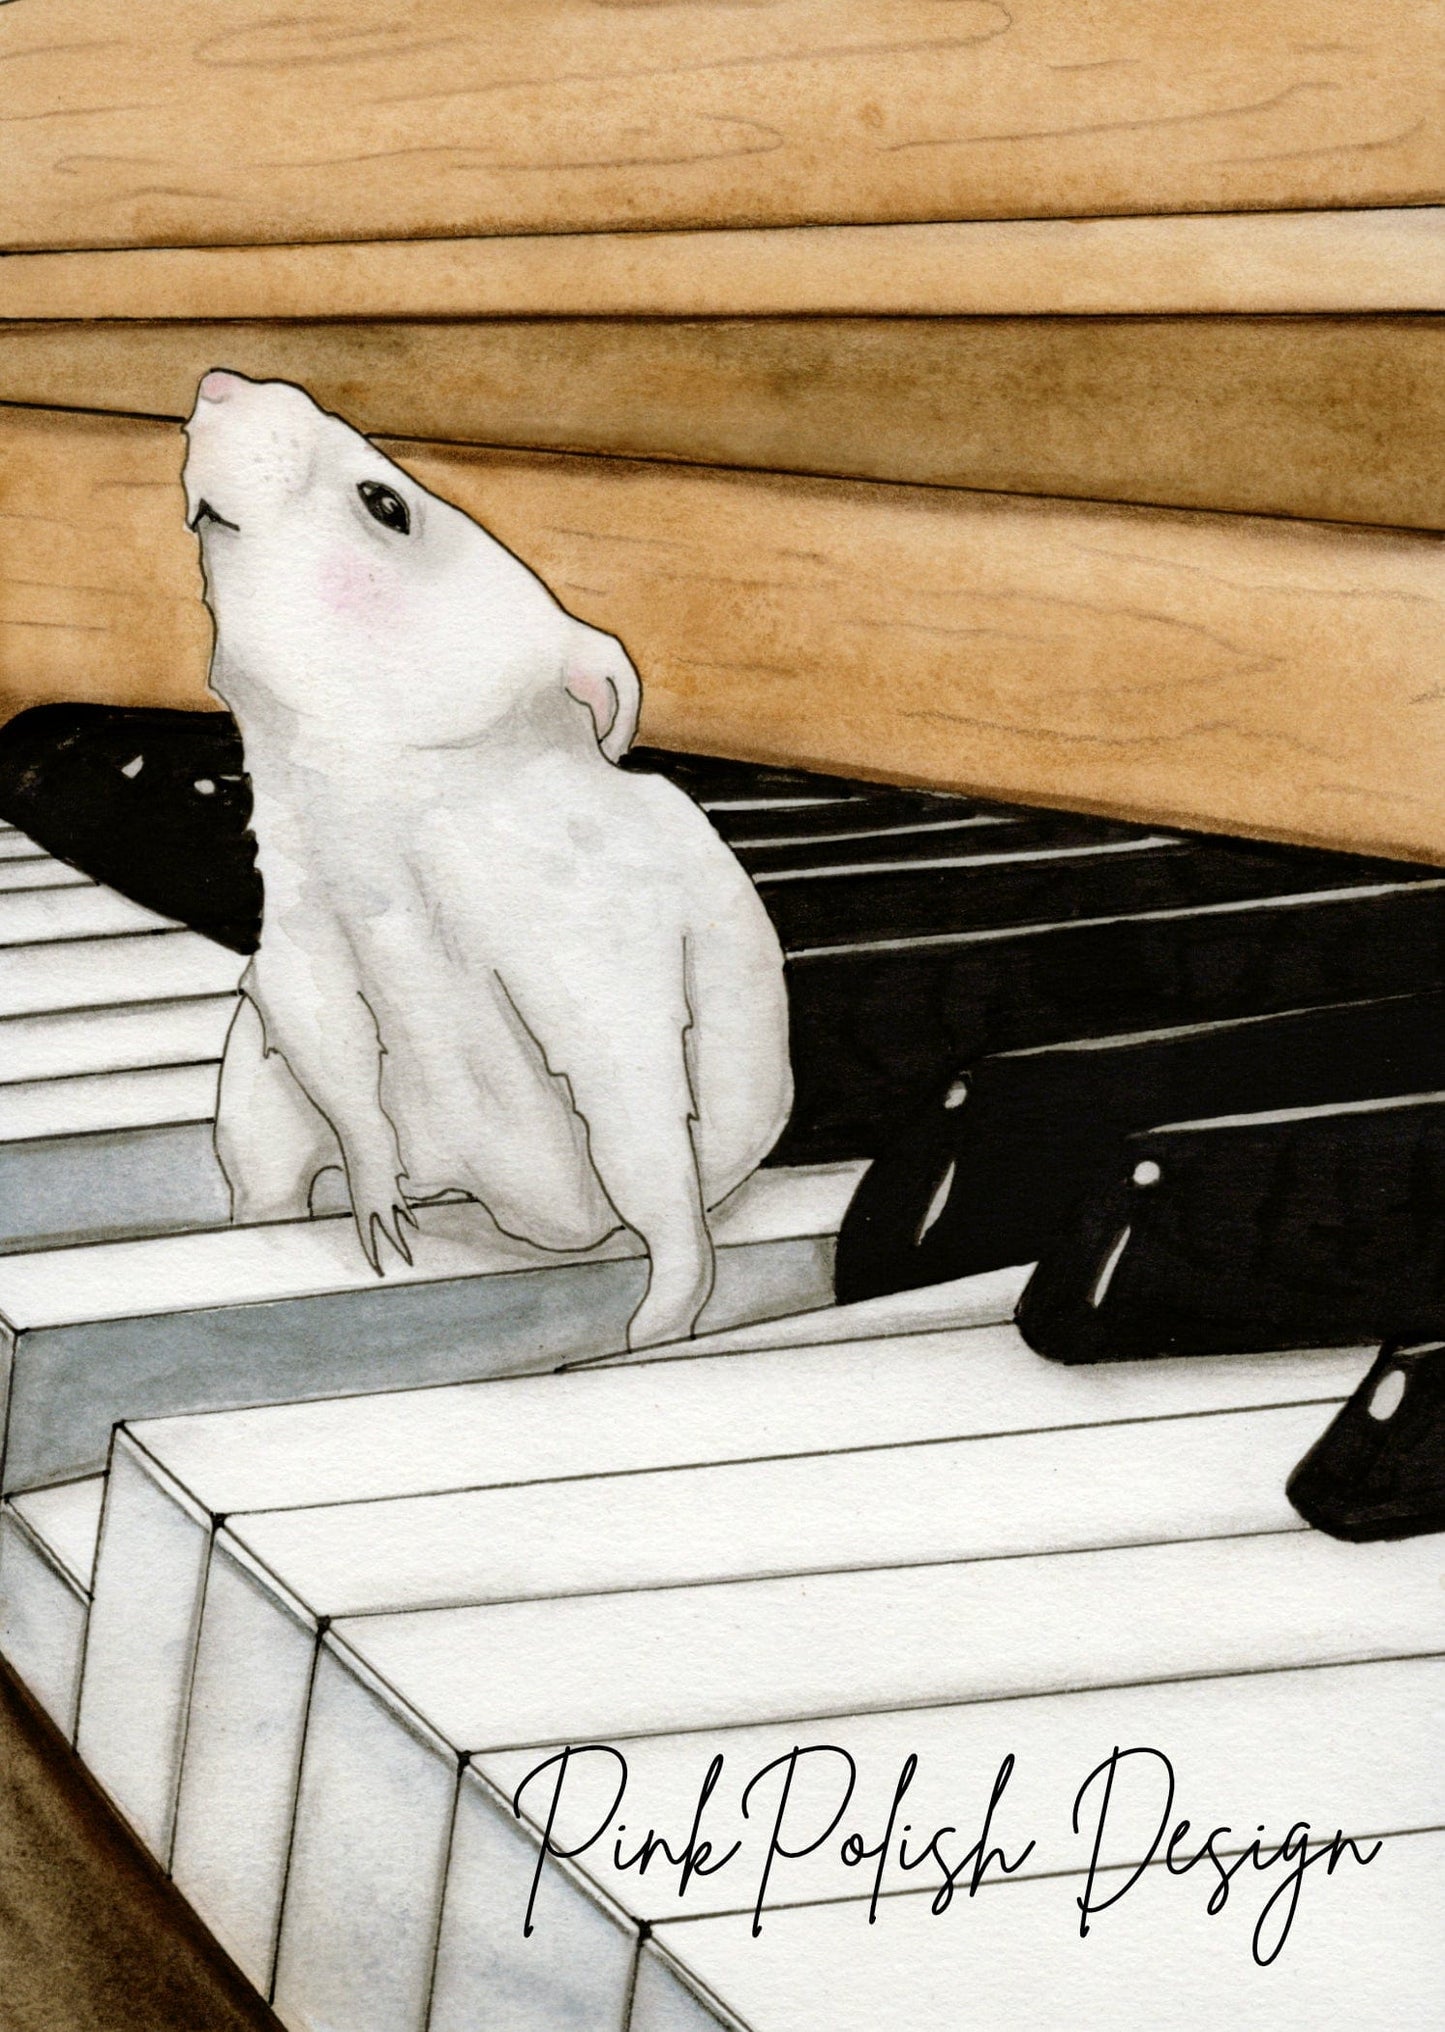 PinkPolish Design Art Prints "Little Pianist" Watercolor Painting: Art Print